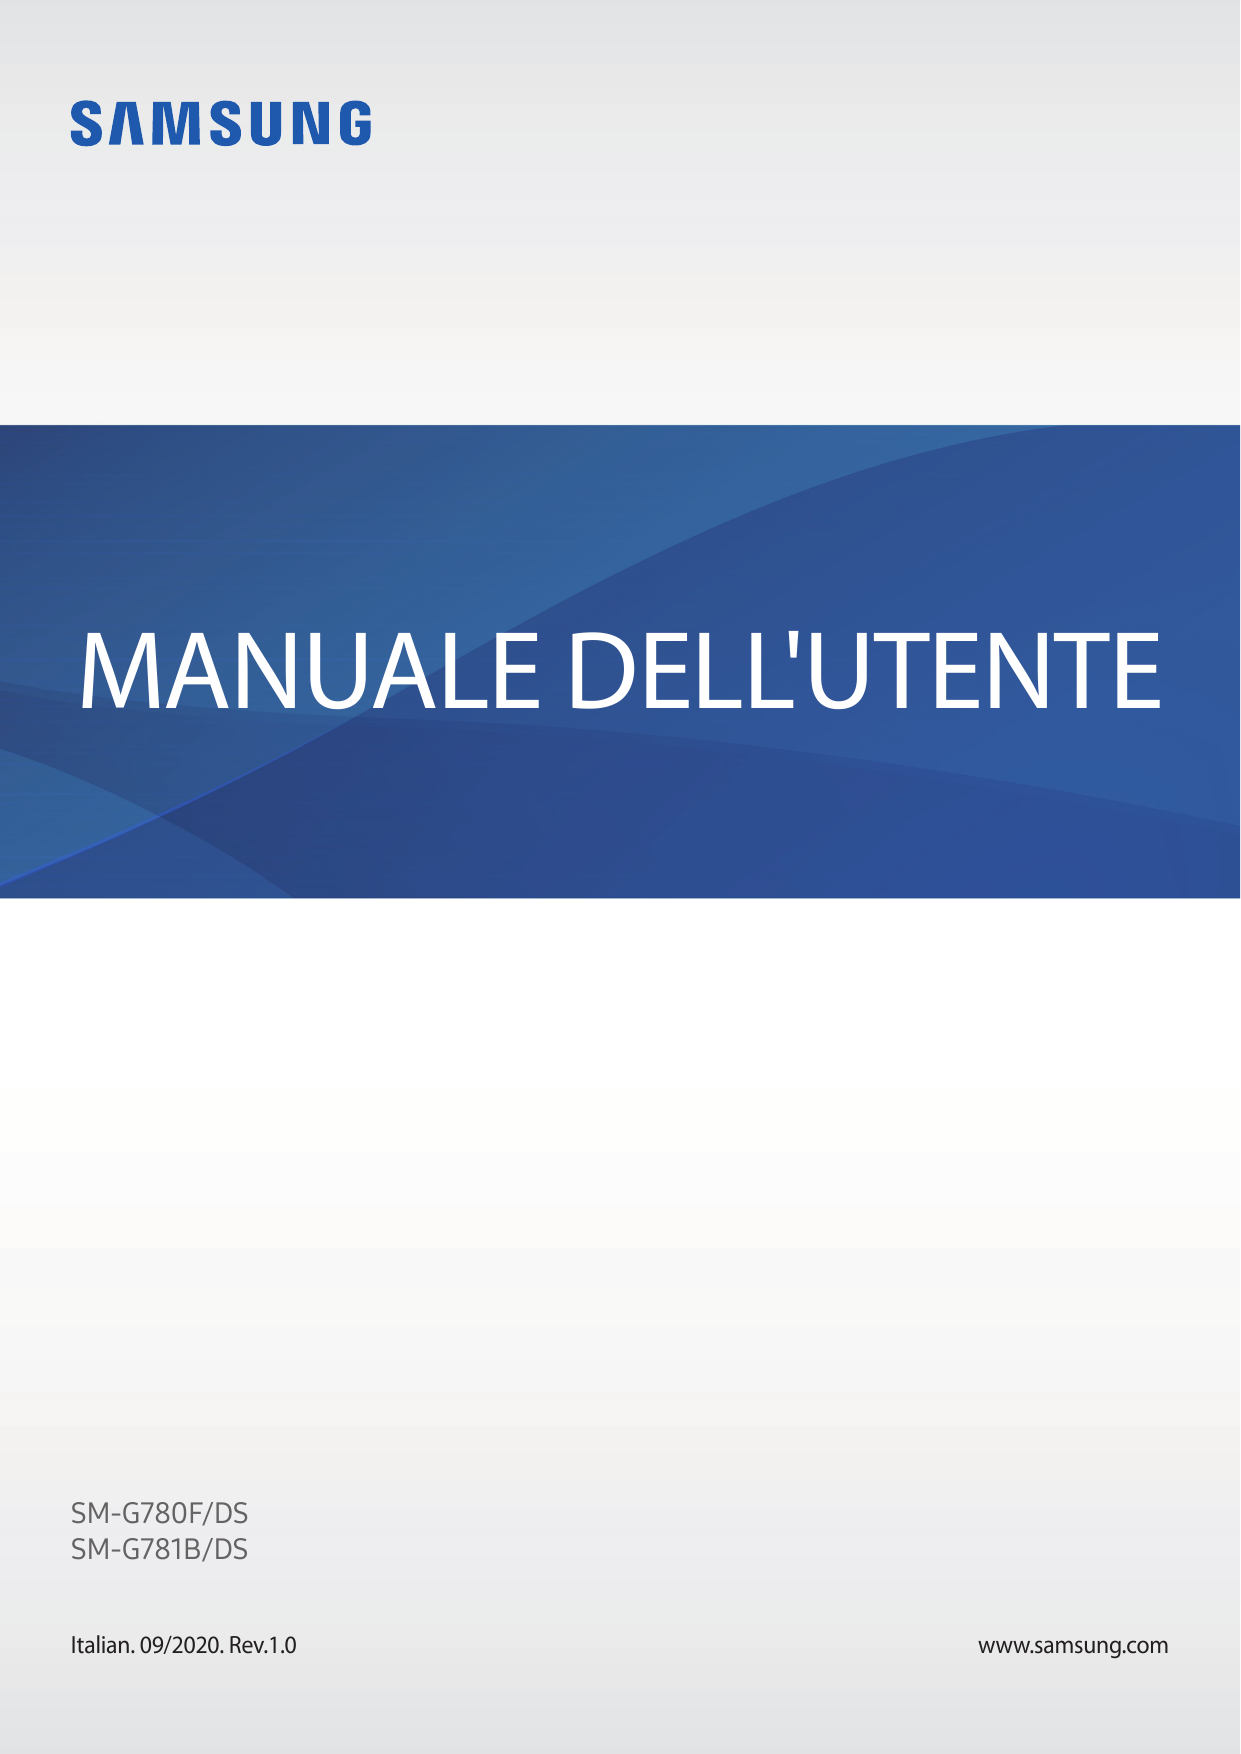 MANUALE DELL'UTENTESM-G780F/DSSM-G781B/DSItalian. 09/2020. Rev.1.0www.samsung.com